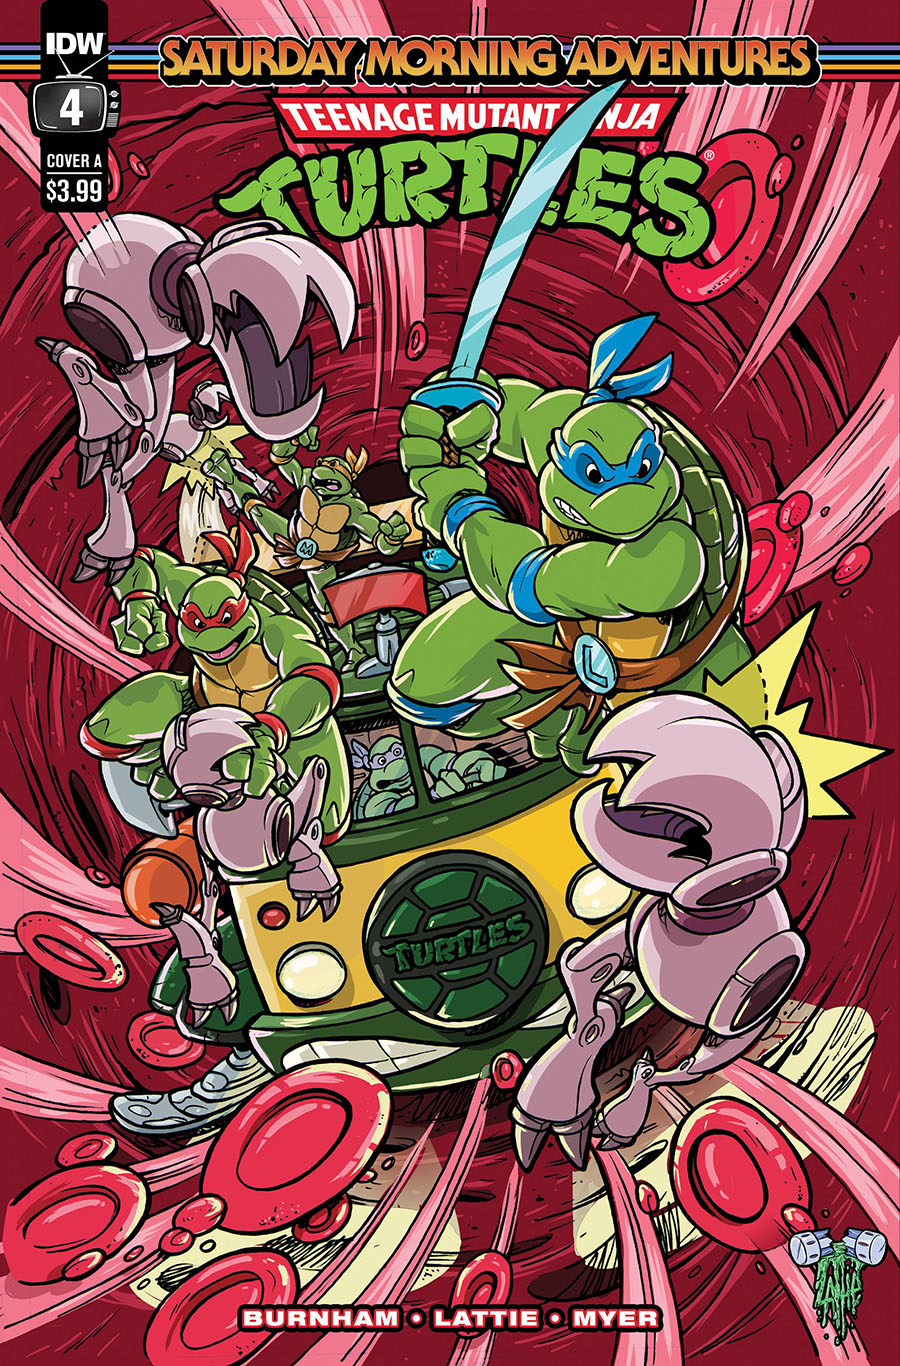 Teenage Mutant Ninja Turtles Saturday Morning Adventures #4 Cover A Regular Tim Lattie Cover